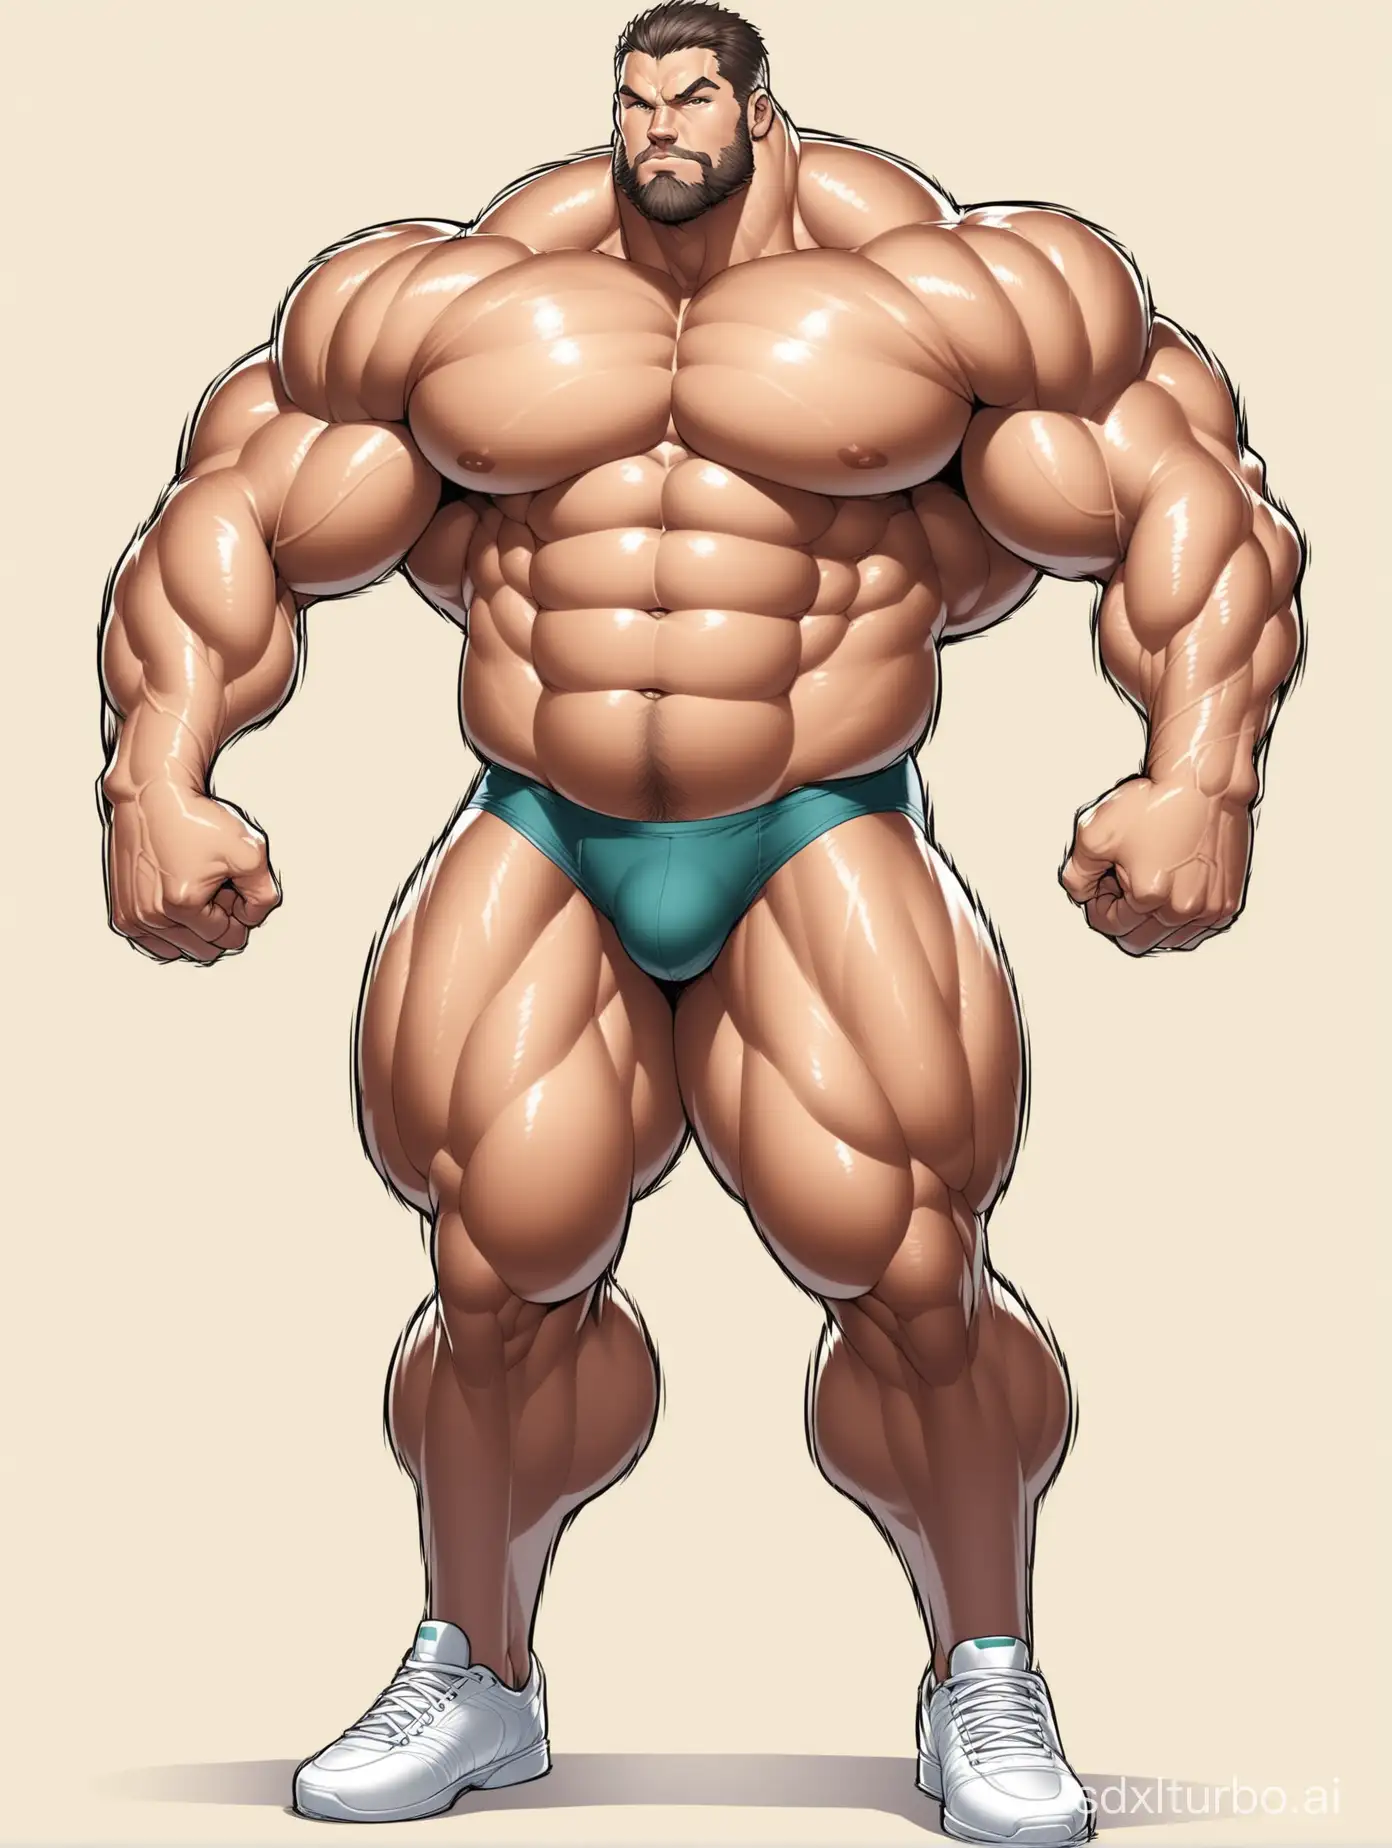 Massive-Muscle-Stud-Showing-Off-Biceps-in-Underwear